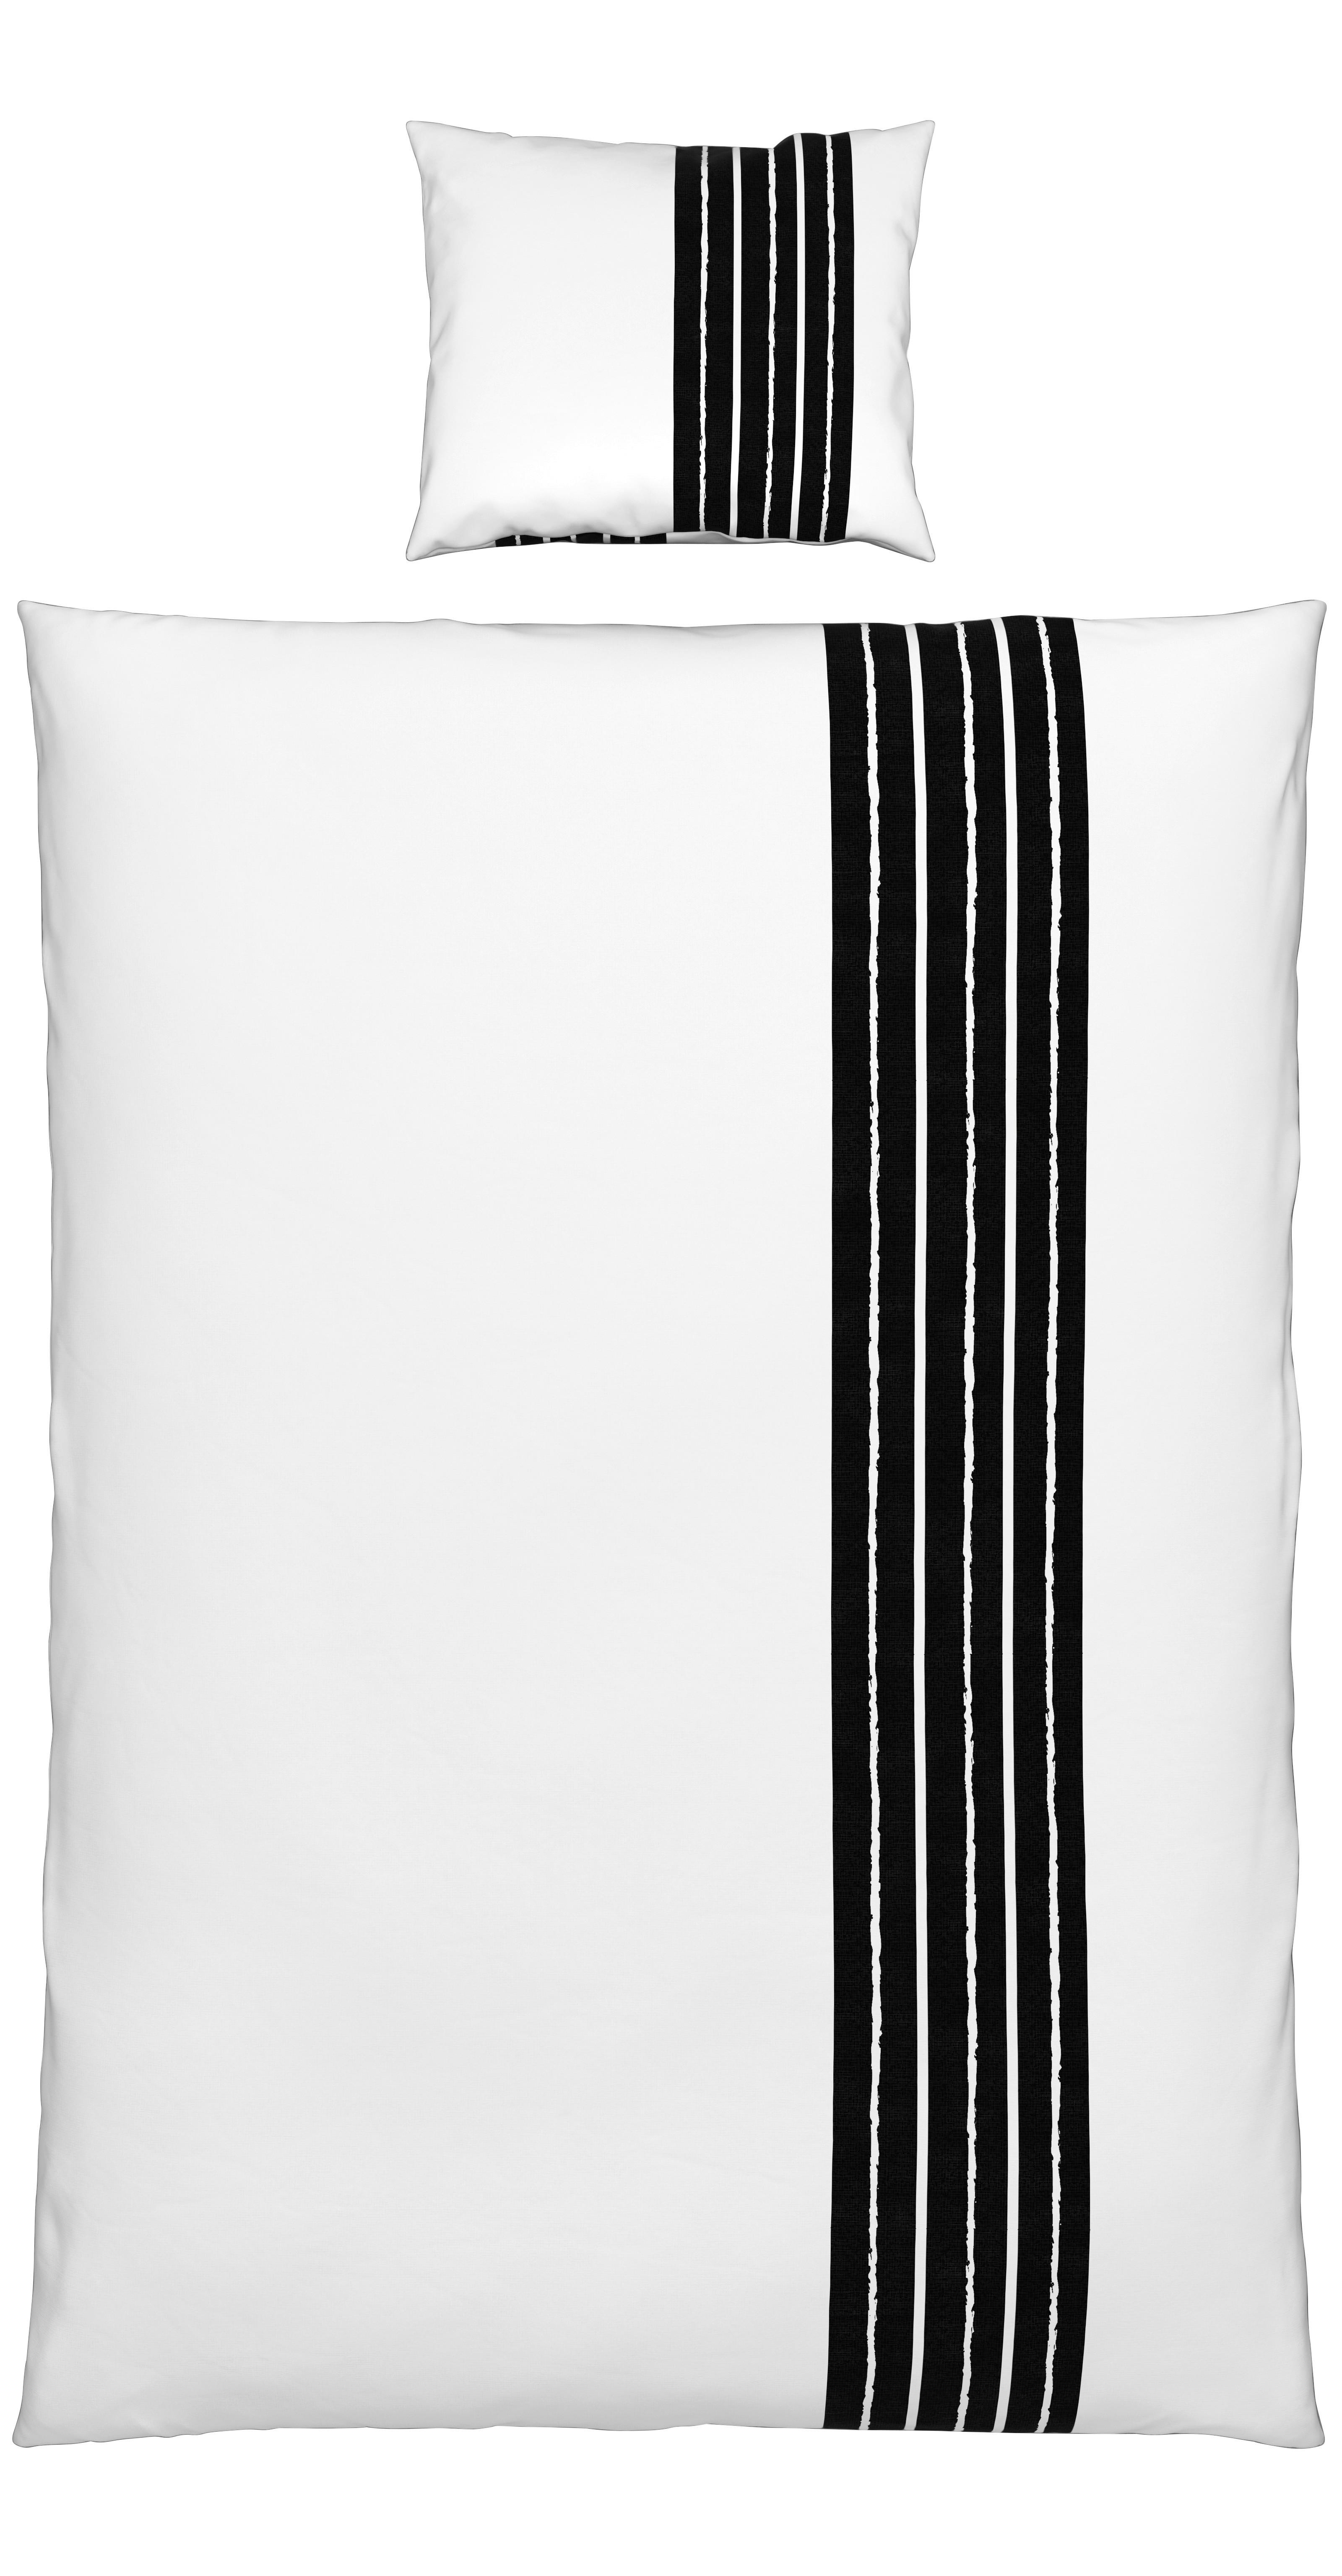 Bettwäsche Stripes in Weiss/Schwarz ca. 160x210cm - Weiss, Modern, Textil (160/210cm) - Modern Living